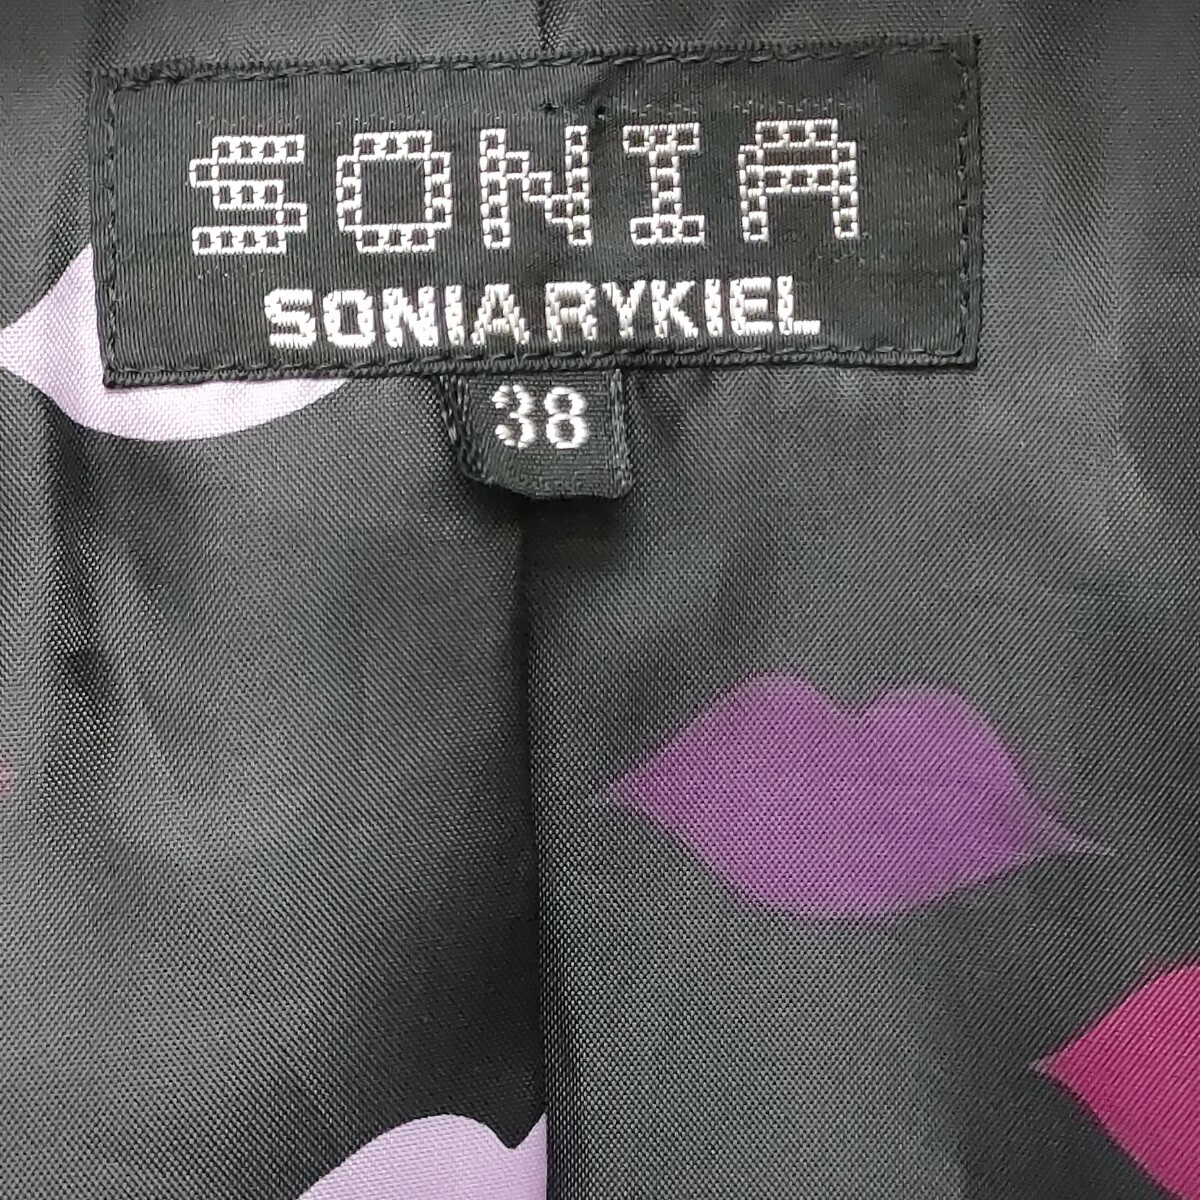 SONIA SONIA RYKIEL/ソニアリキエル レディース ウール混 テーラードジャケット ブラウン×ピンク系チェック柄 38サイズ I-3672_画像4